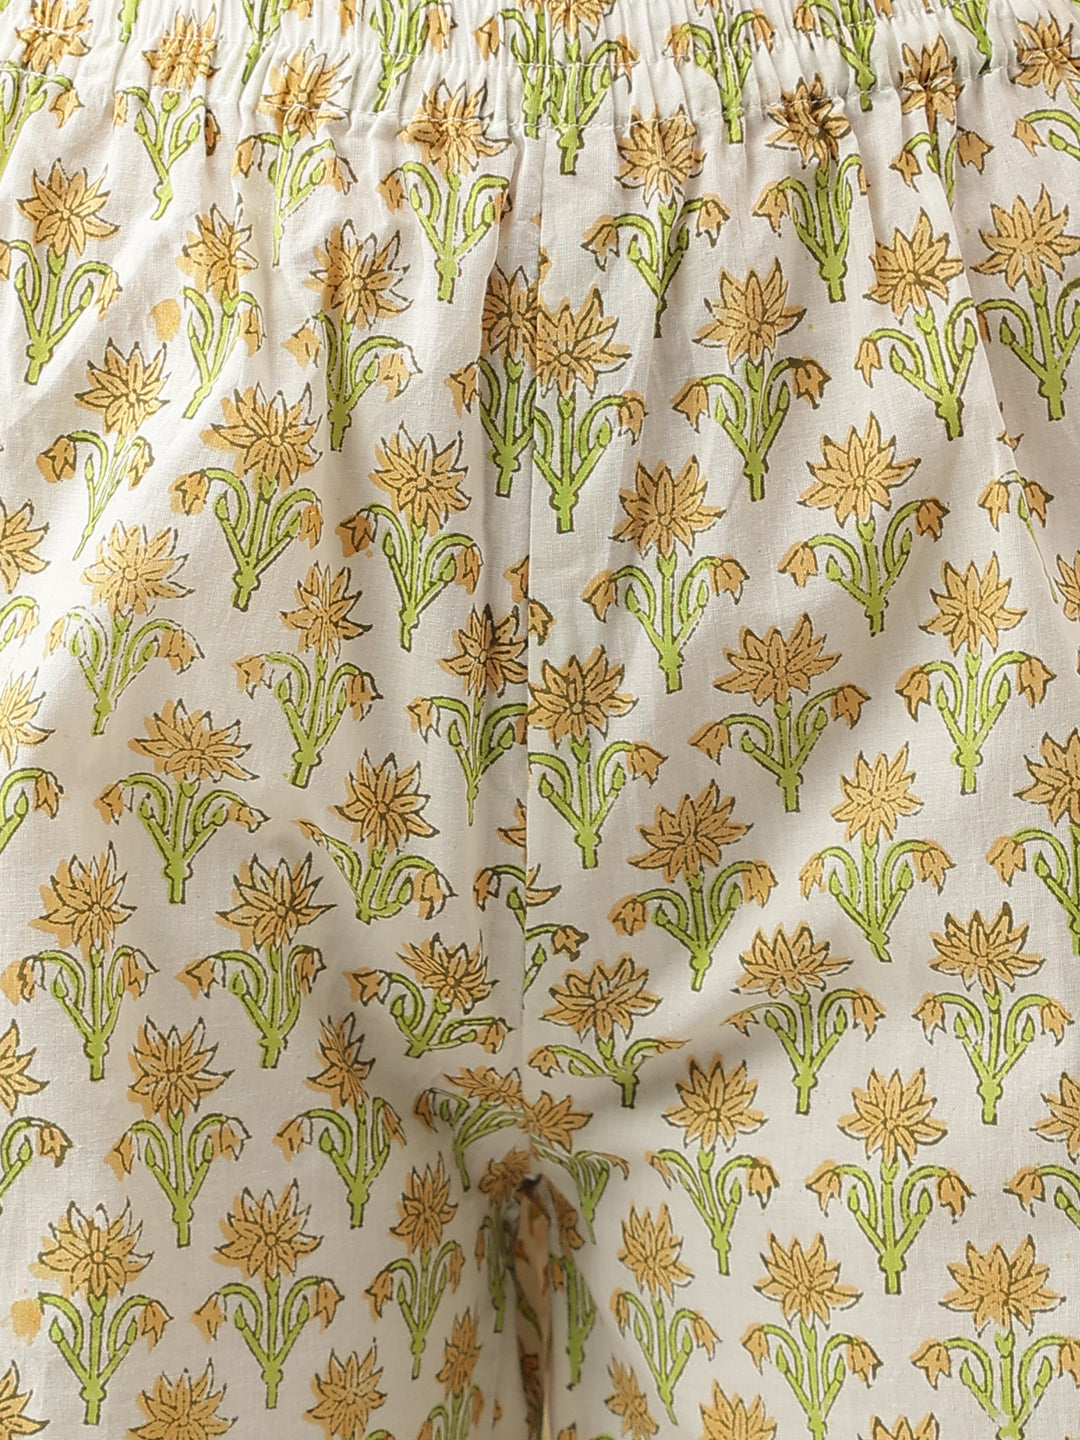 Divena Green Floral Printed Cotton Straight Short Kurta, trousers with Dupatta Set